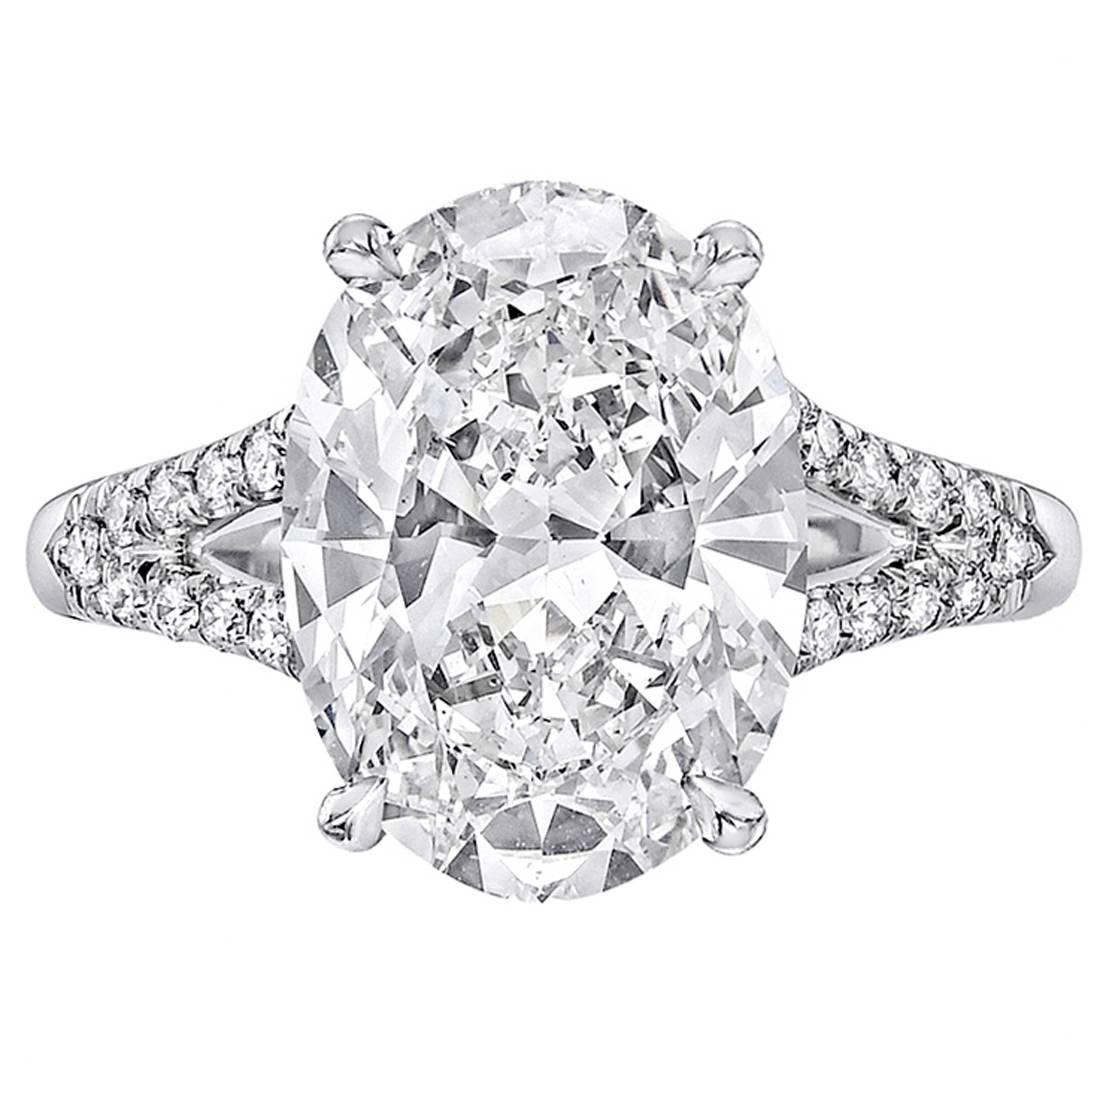 4.17 Carat Oval-Cut Diamond platinum Engagement Ring